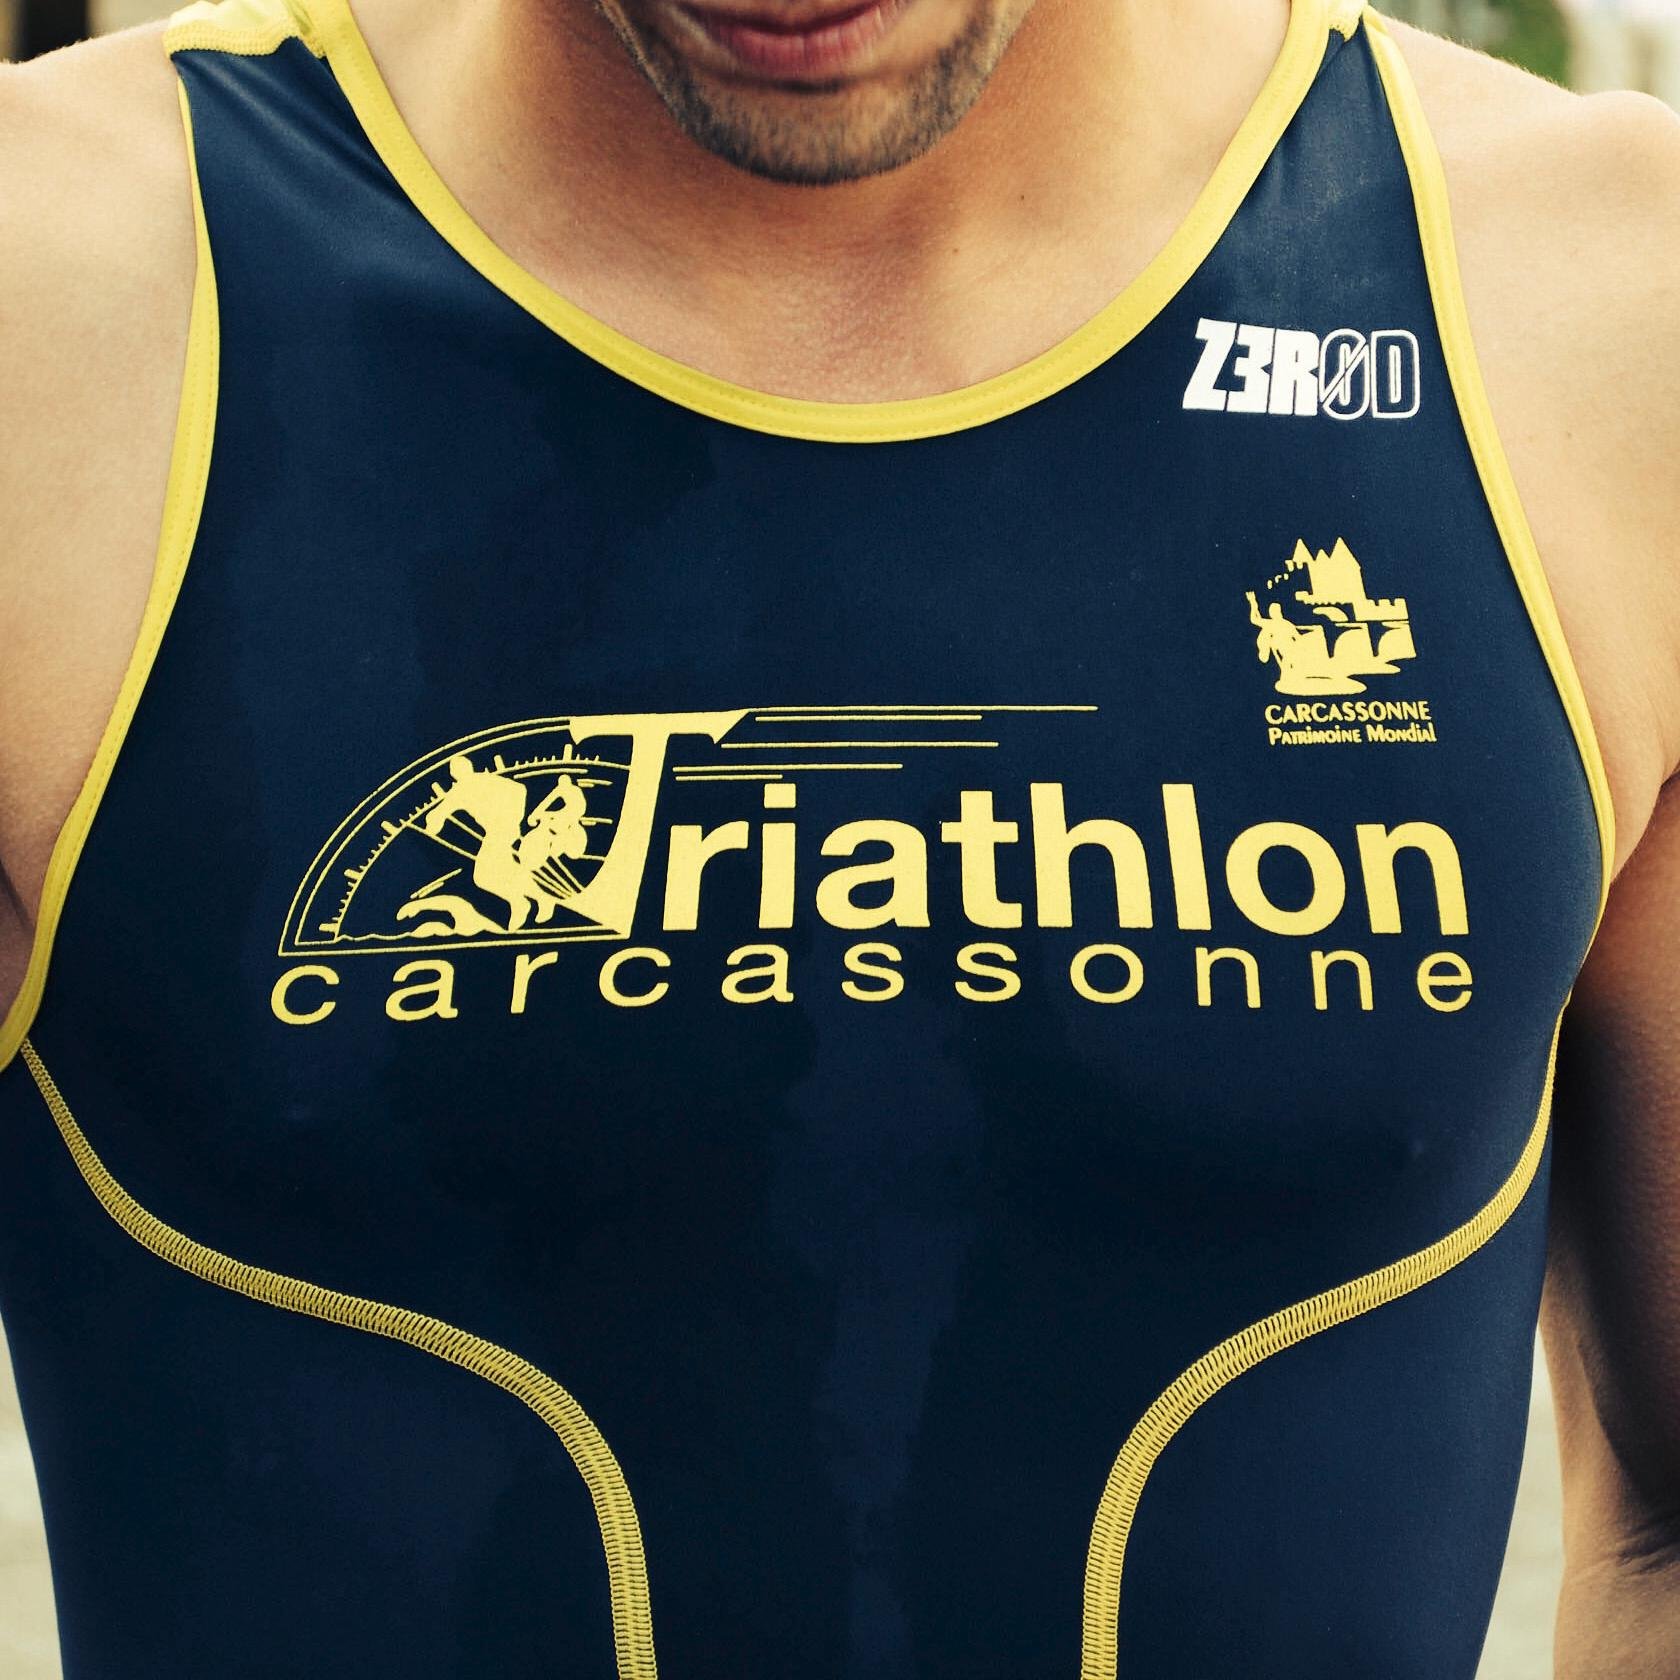 Triathlon Club Carcassonne / https://t.co/5xBFaCifv0 / Triathlon & Swimrun de Carcassonne 2018 / https://t.co/WIFC0JVssl / SPIRIT since 1986